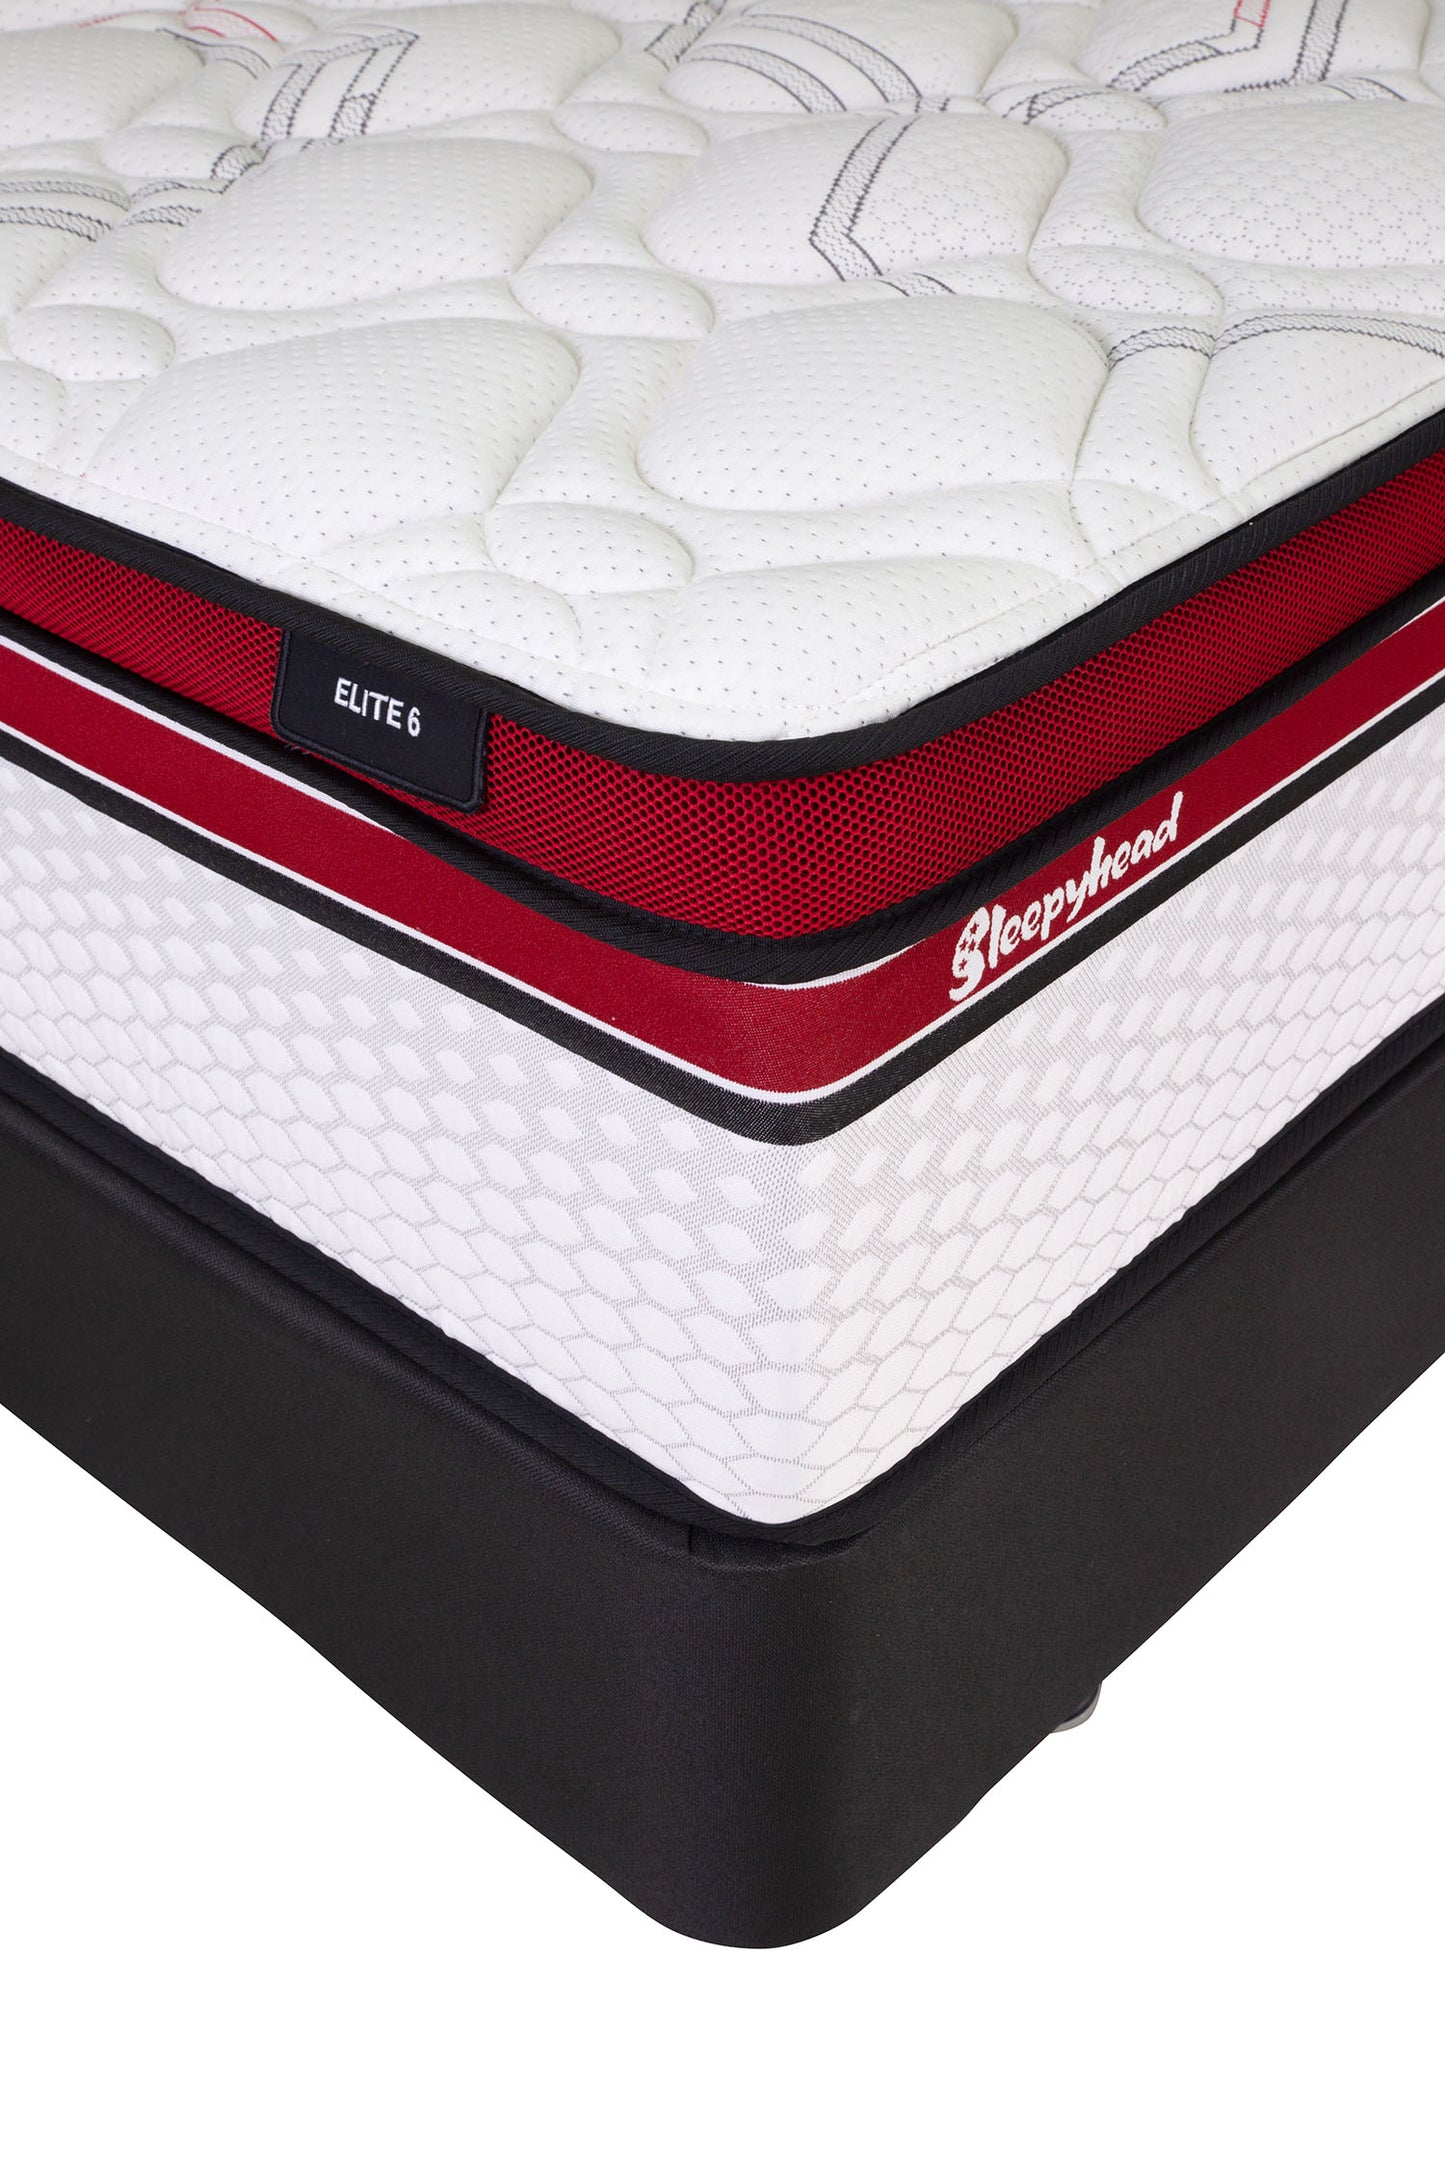 elite6-queen-mattress-3